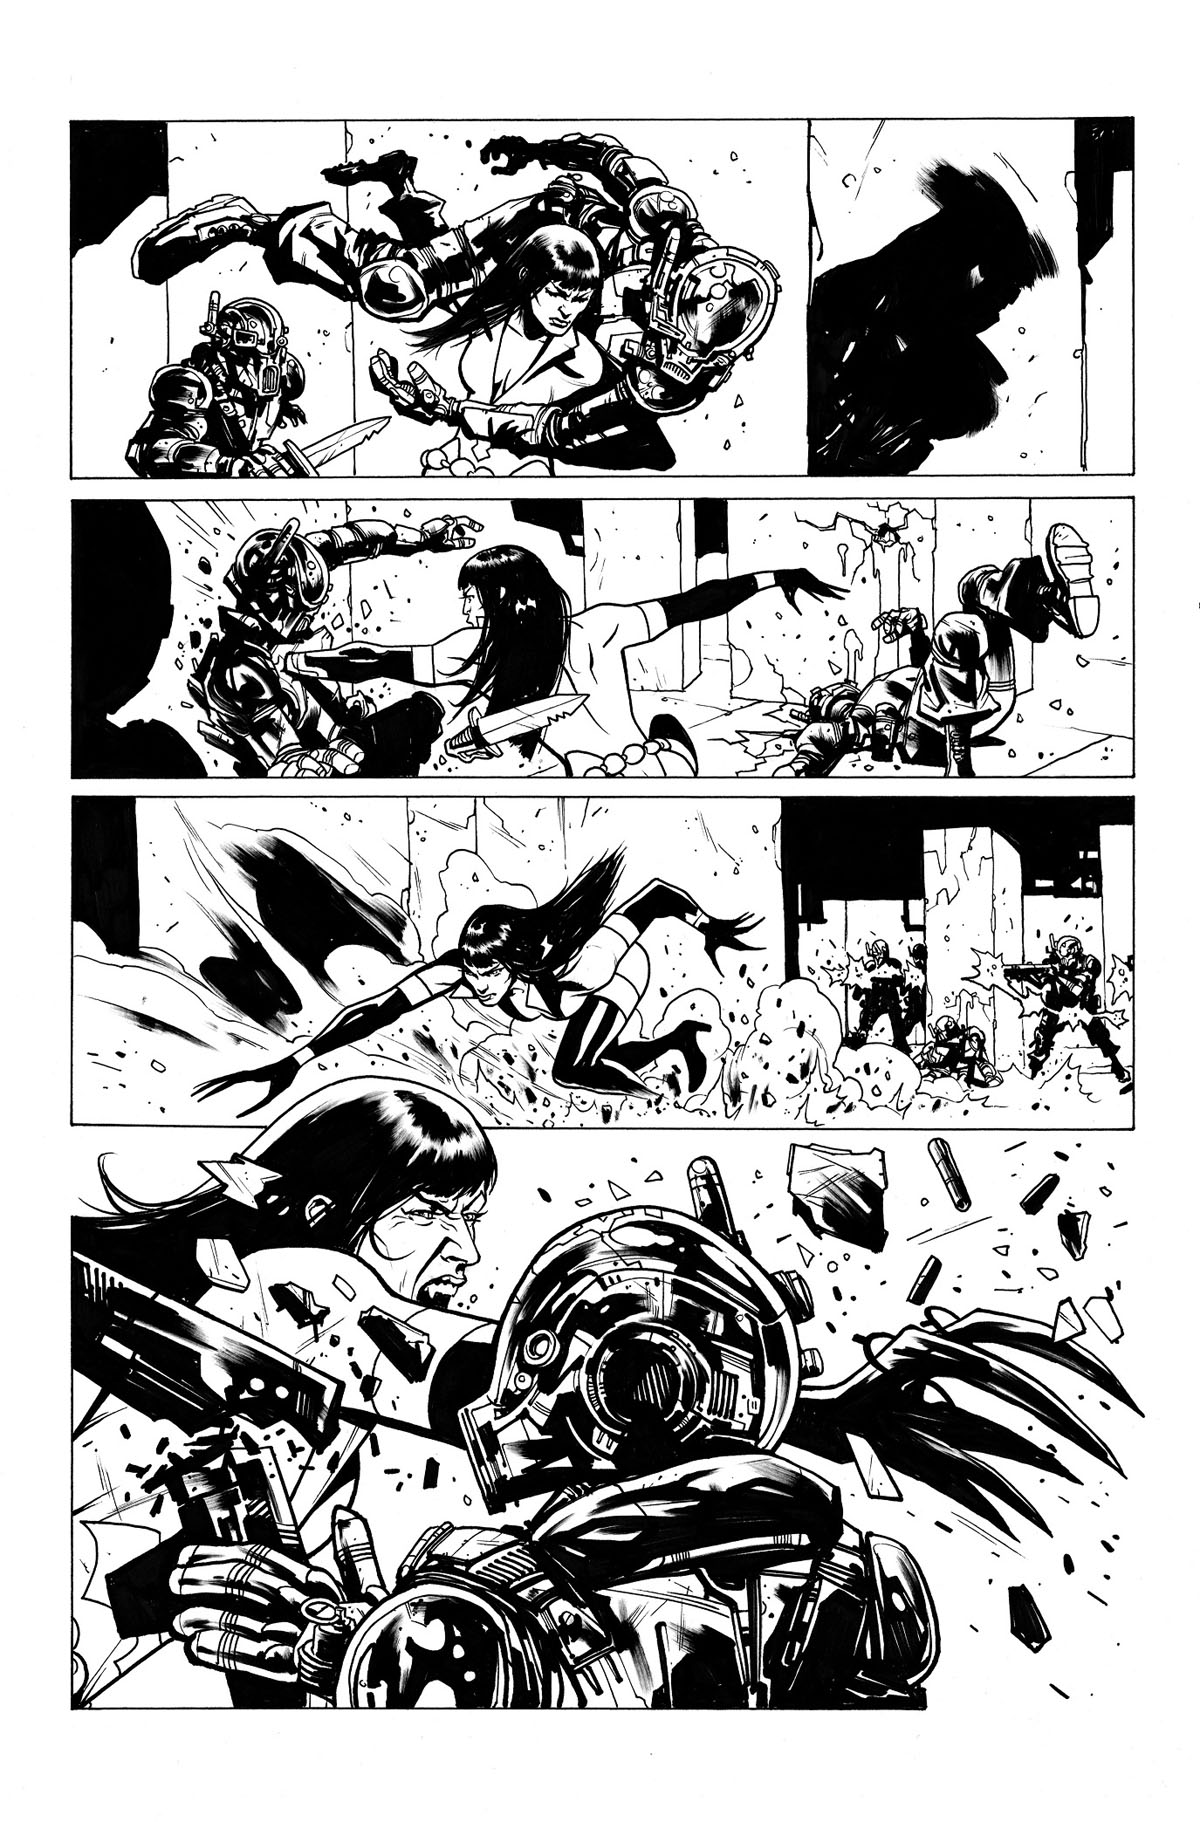 Vampirella: The Dark Powers #1 page 5